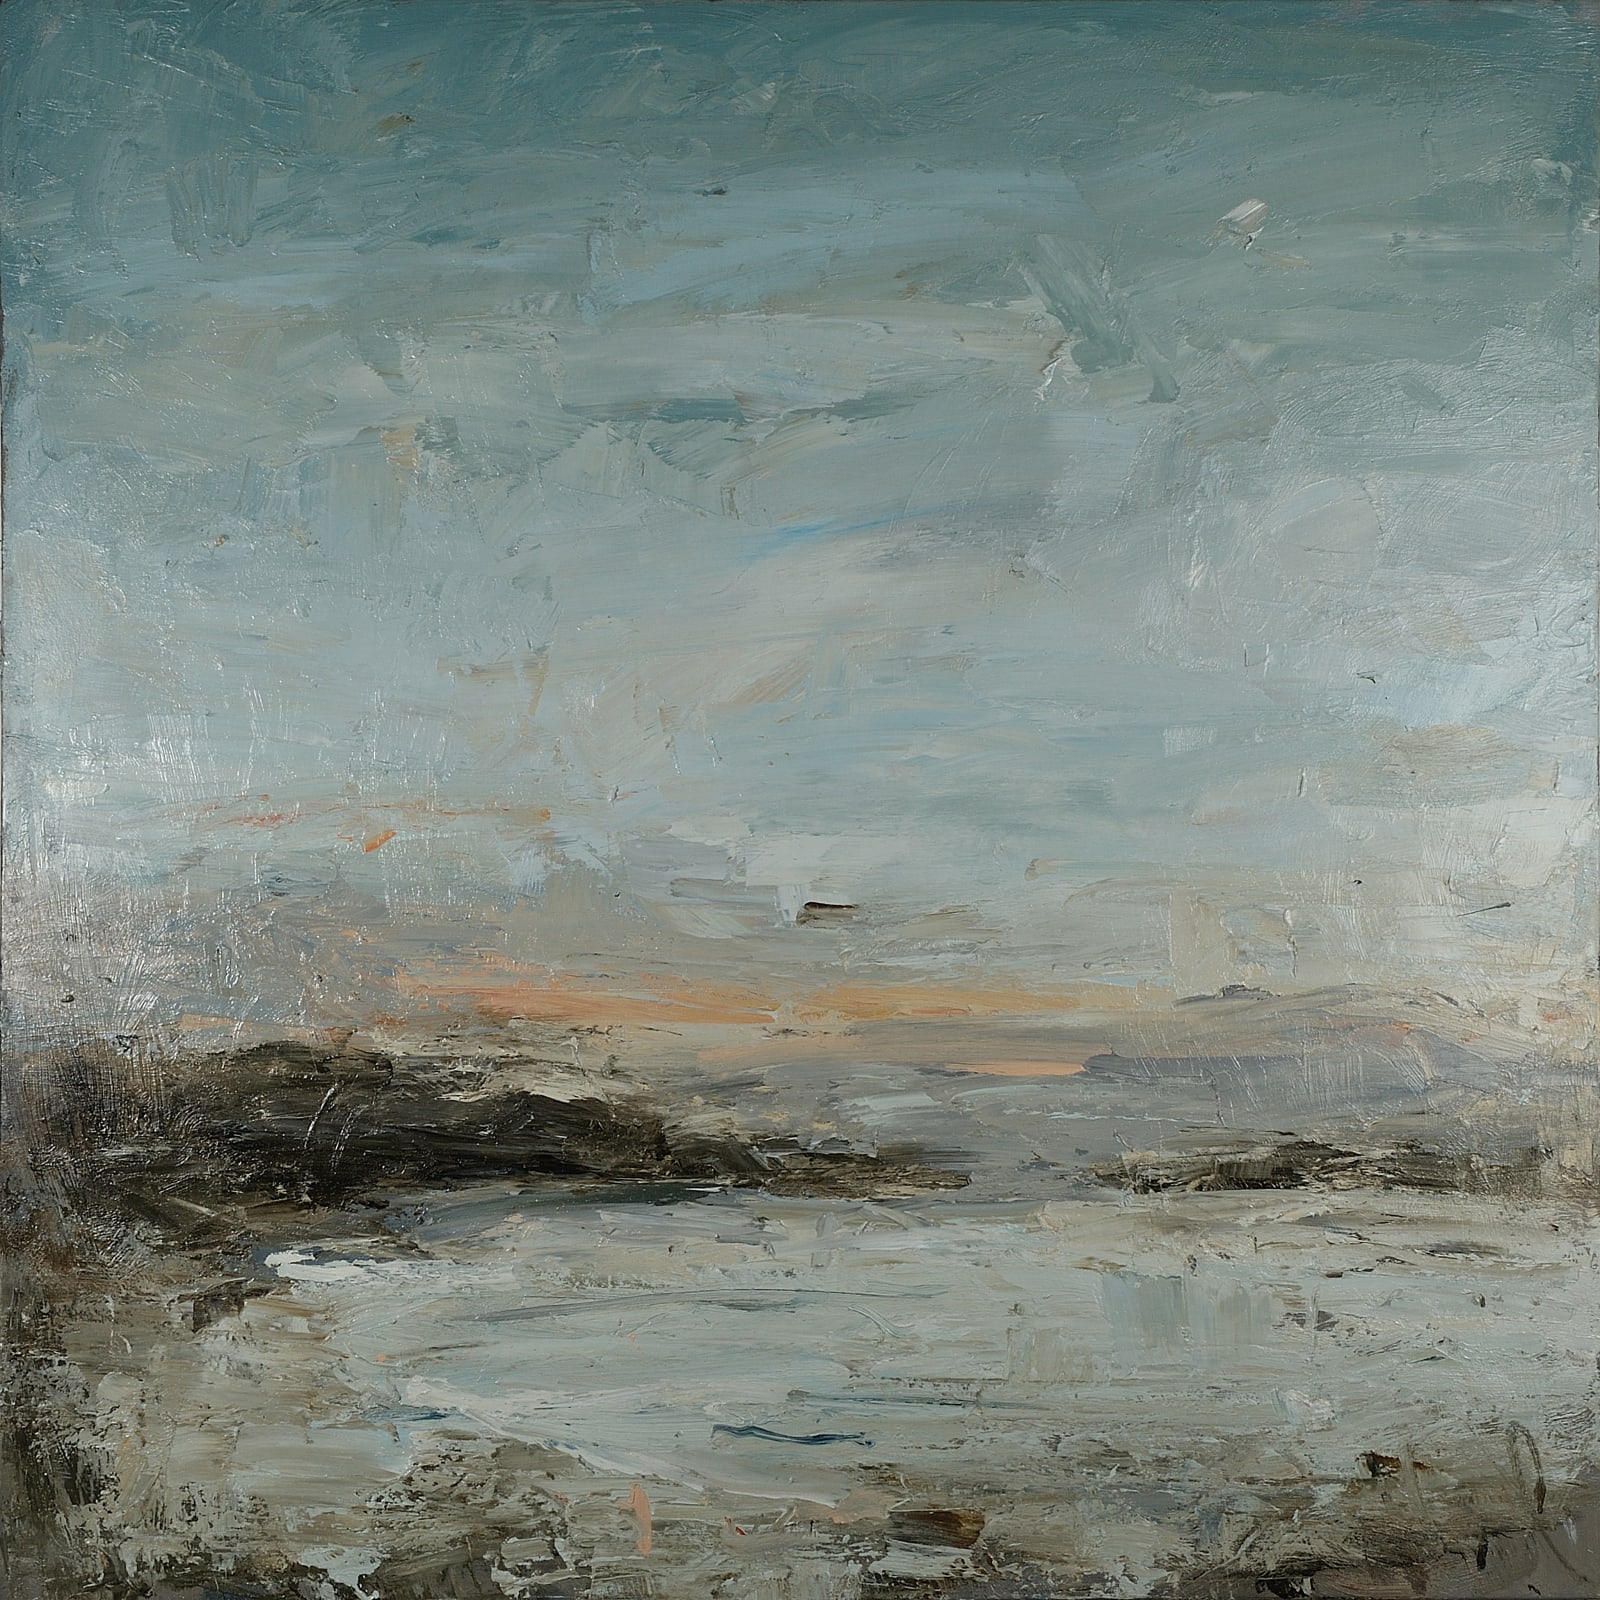 Bay of light, Applecross oil on canvas 130cm x 130cm